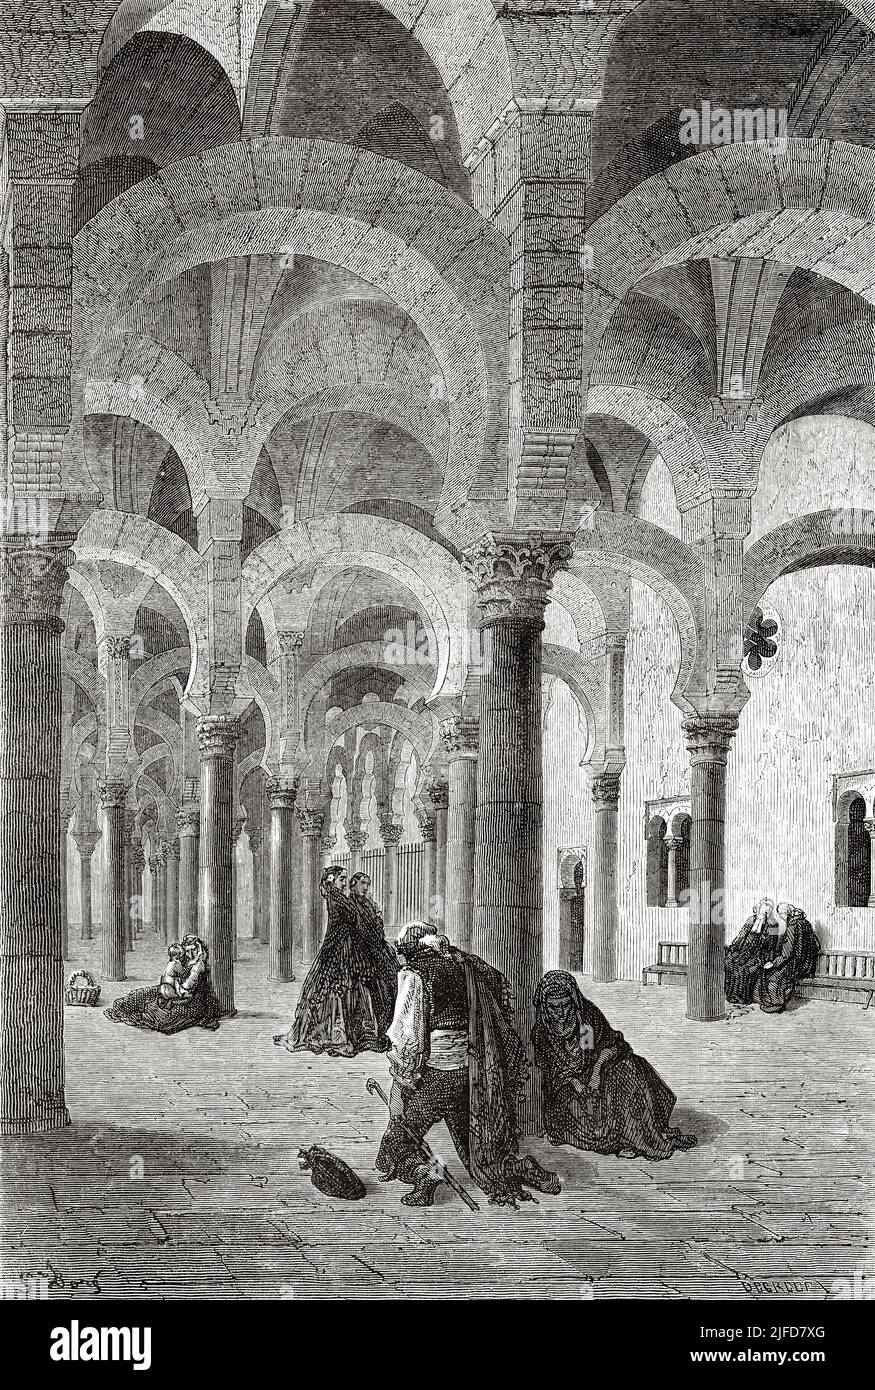 Interior de la Gran Mezquita de Córdoba, Andalucía, España. Europa. Viajes por España de Gustave Dore y Jean Charles Davillier de Le Tour du Monde 1867 Foto de stock